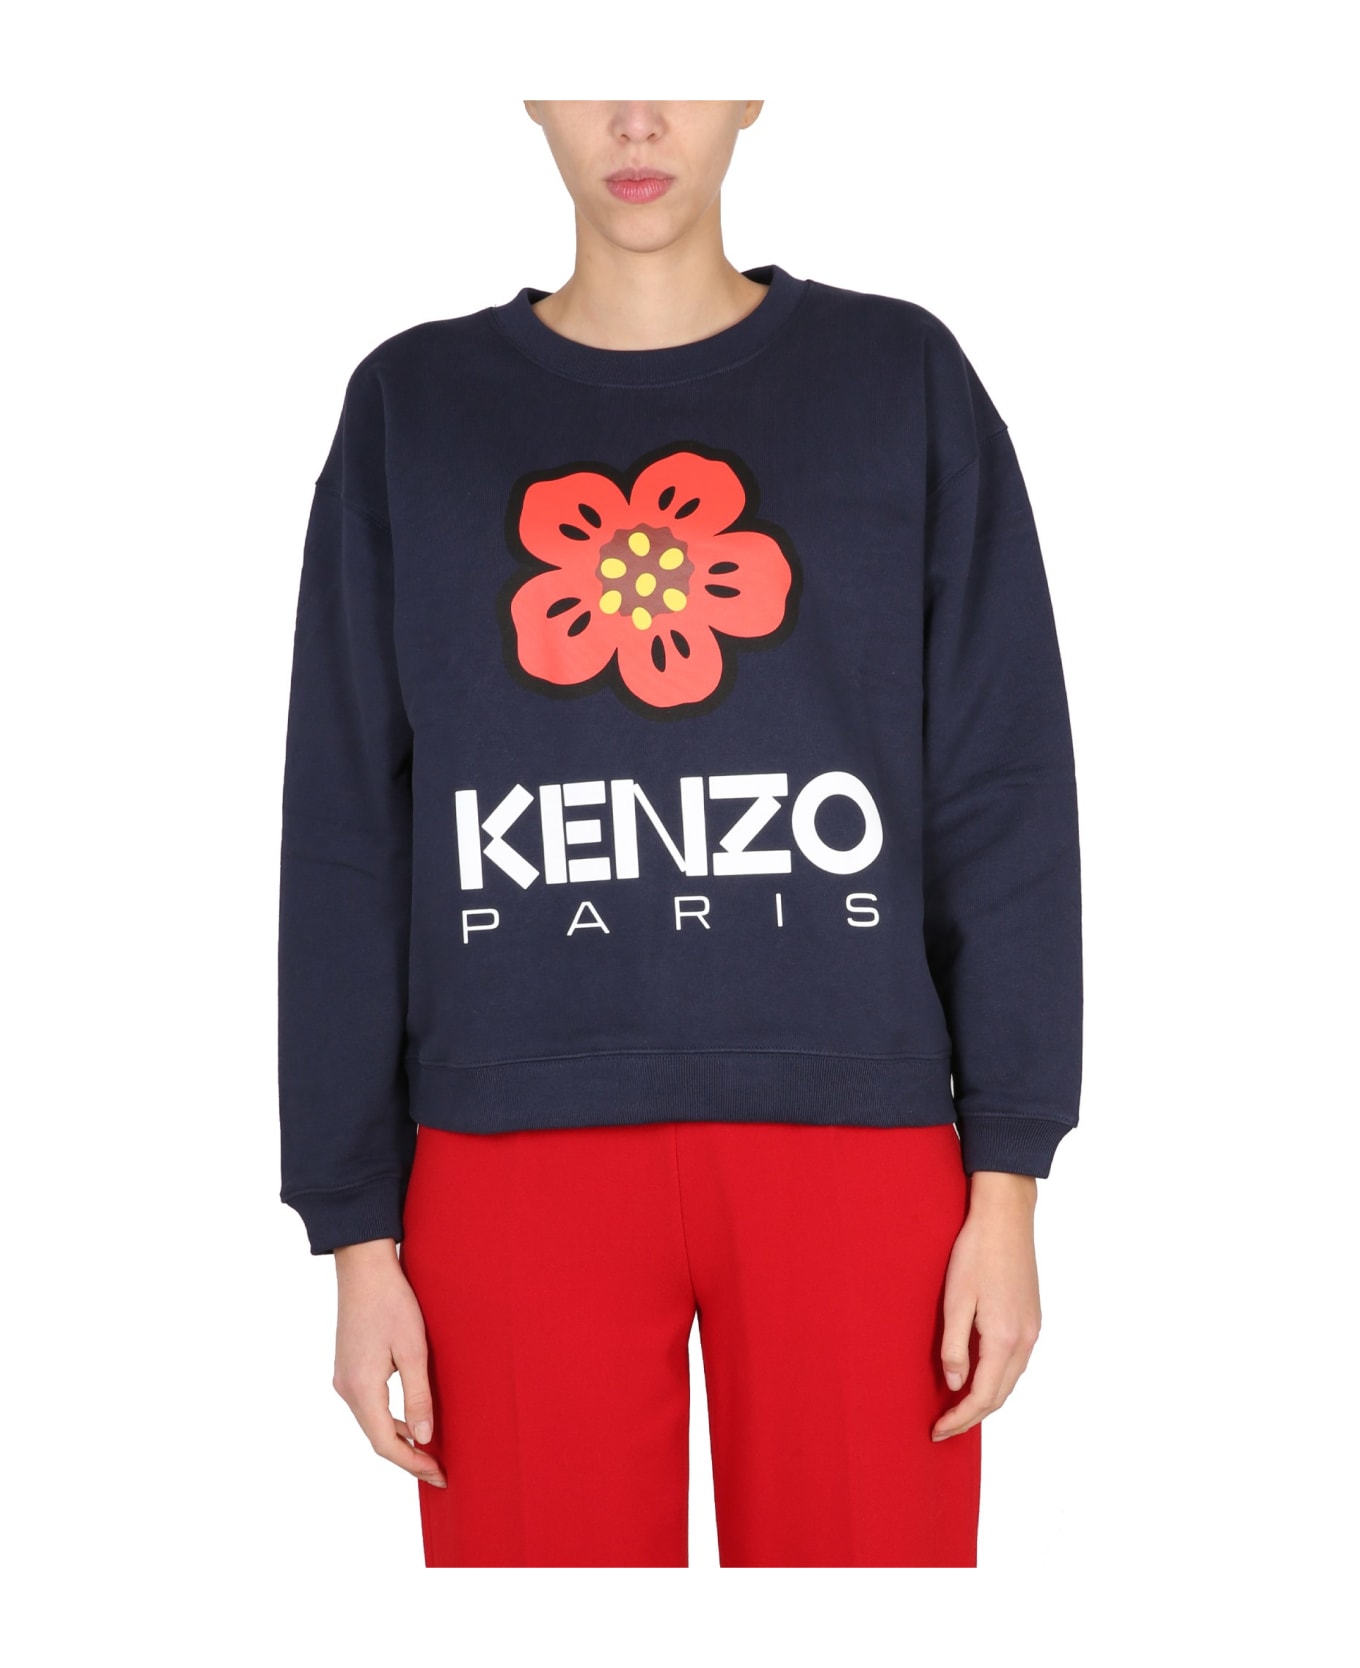 Kenzo 'kenzo Paris' Sweatshirt - Bleu Nuit